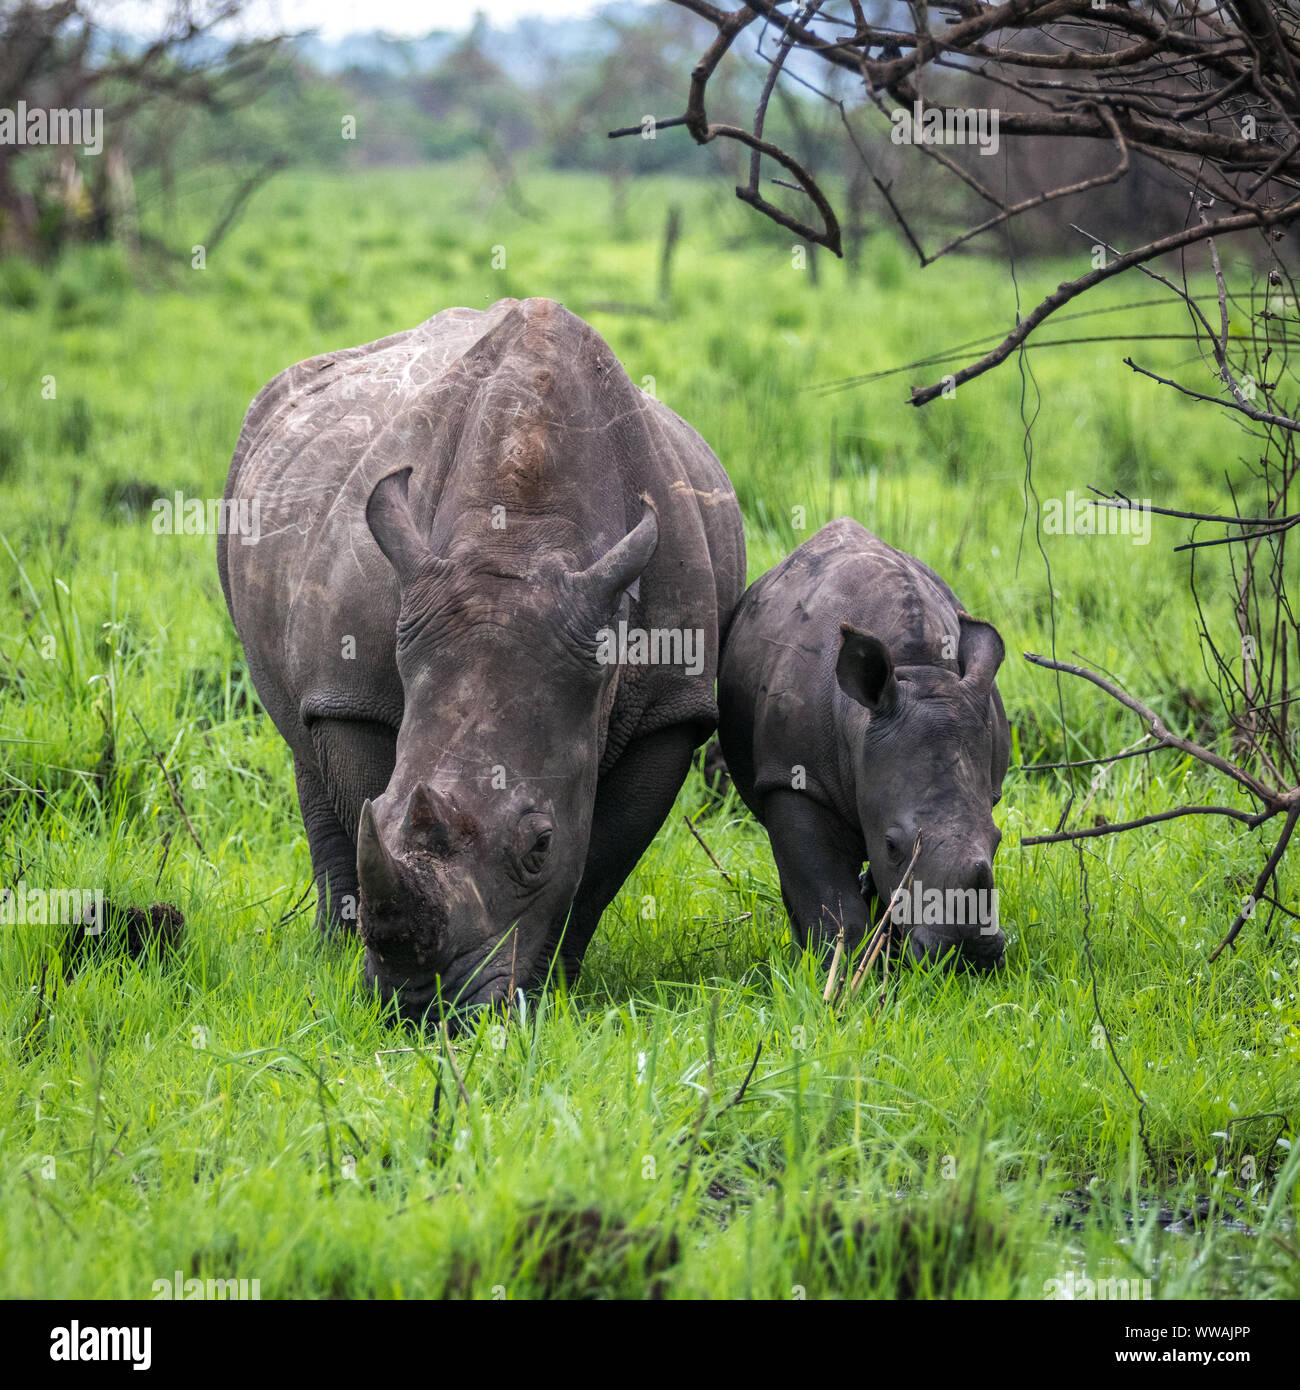 Southern white rhinoceros (Ceratotherium simum simum) mother and calf seen during safari in Ziwa Rhino Sanctuary, Uganda Stock Photo